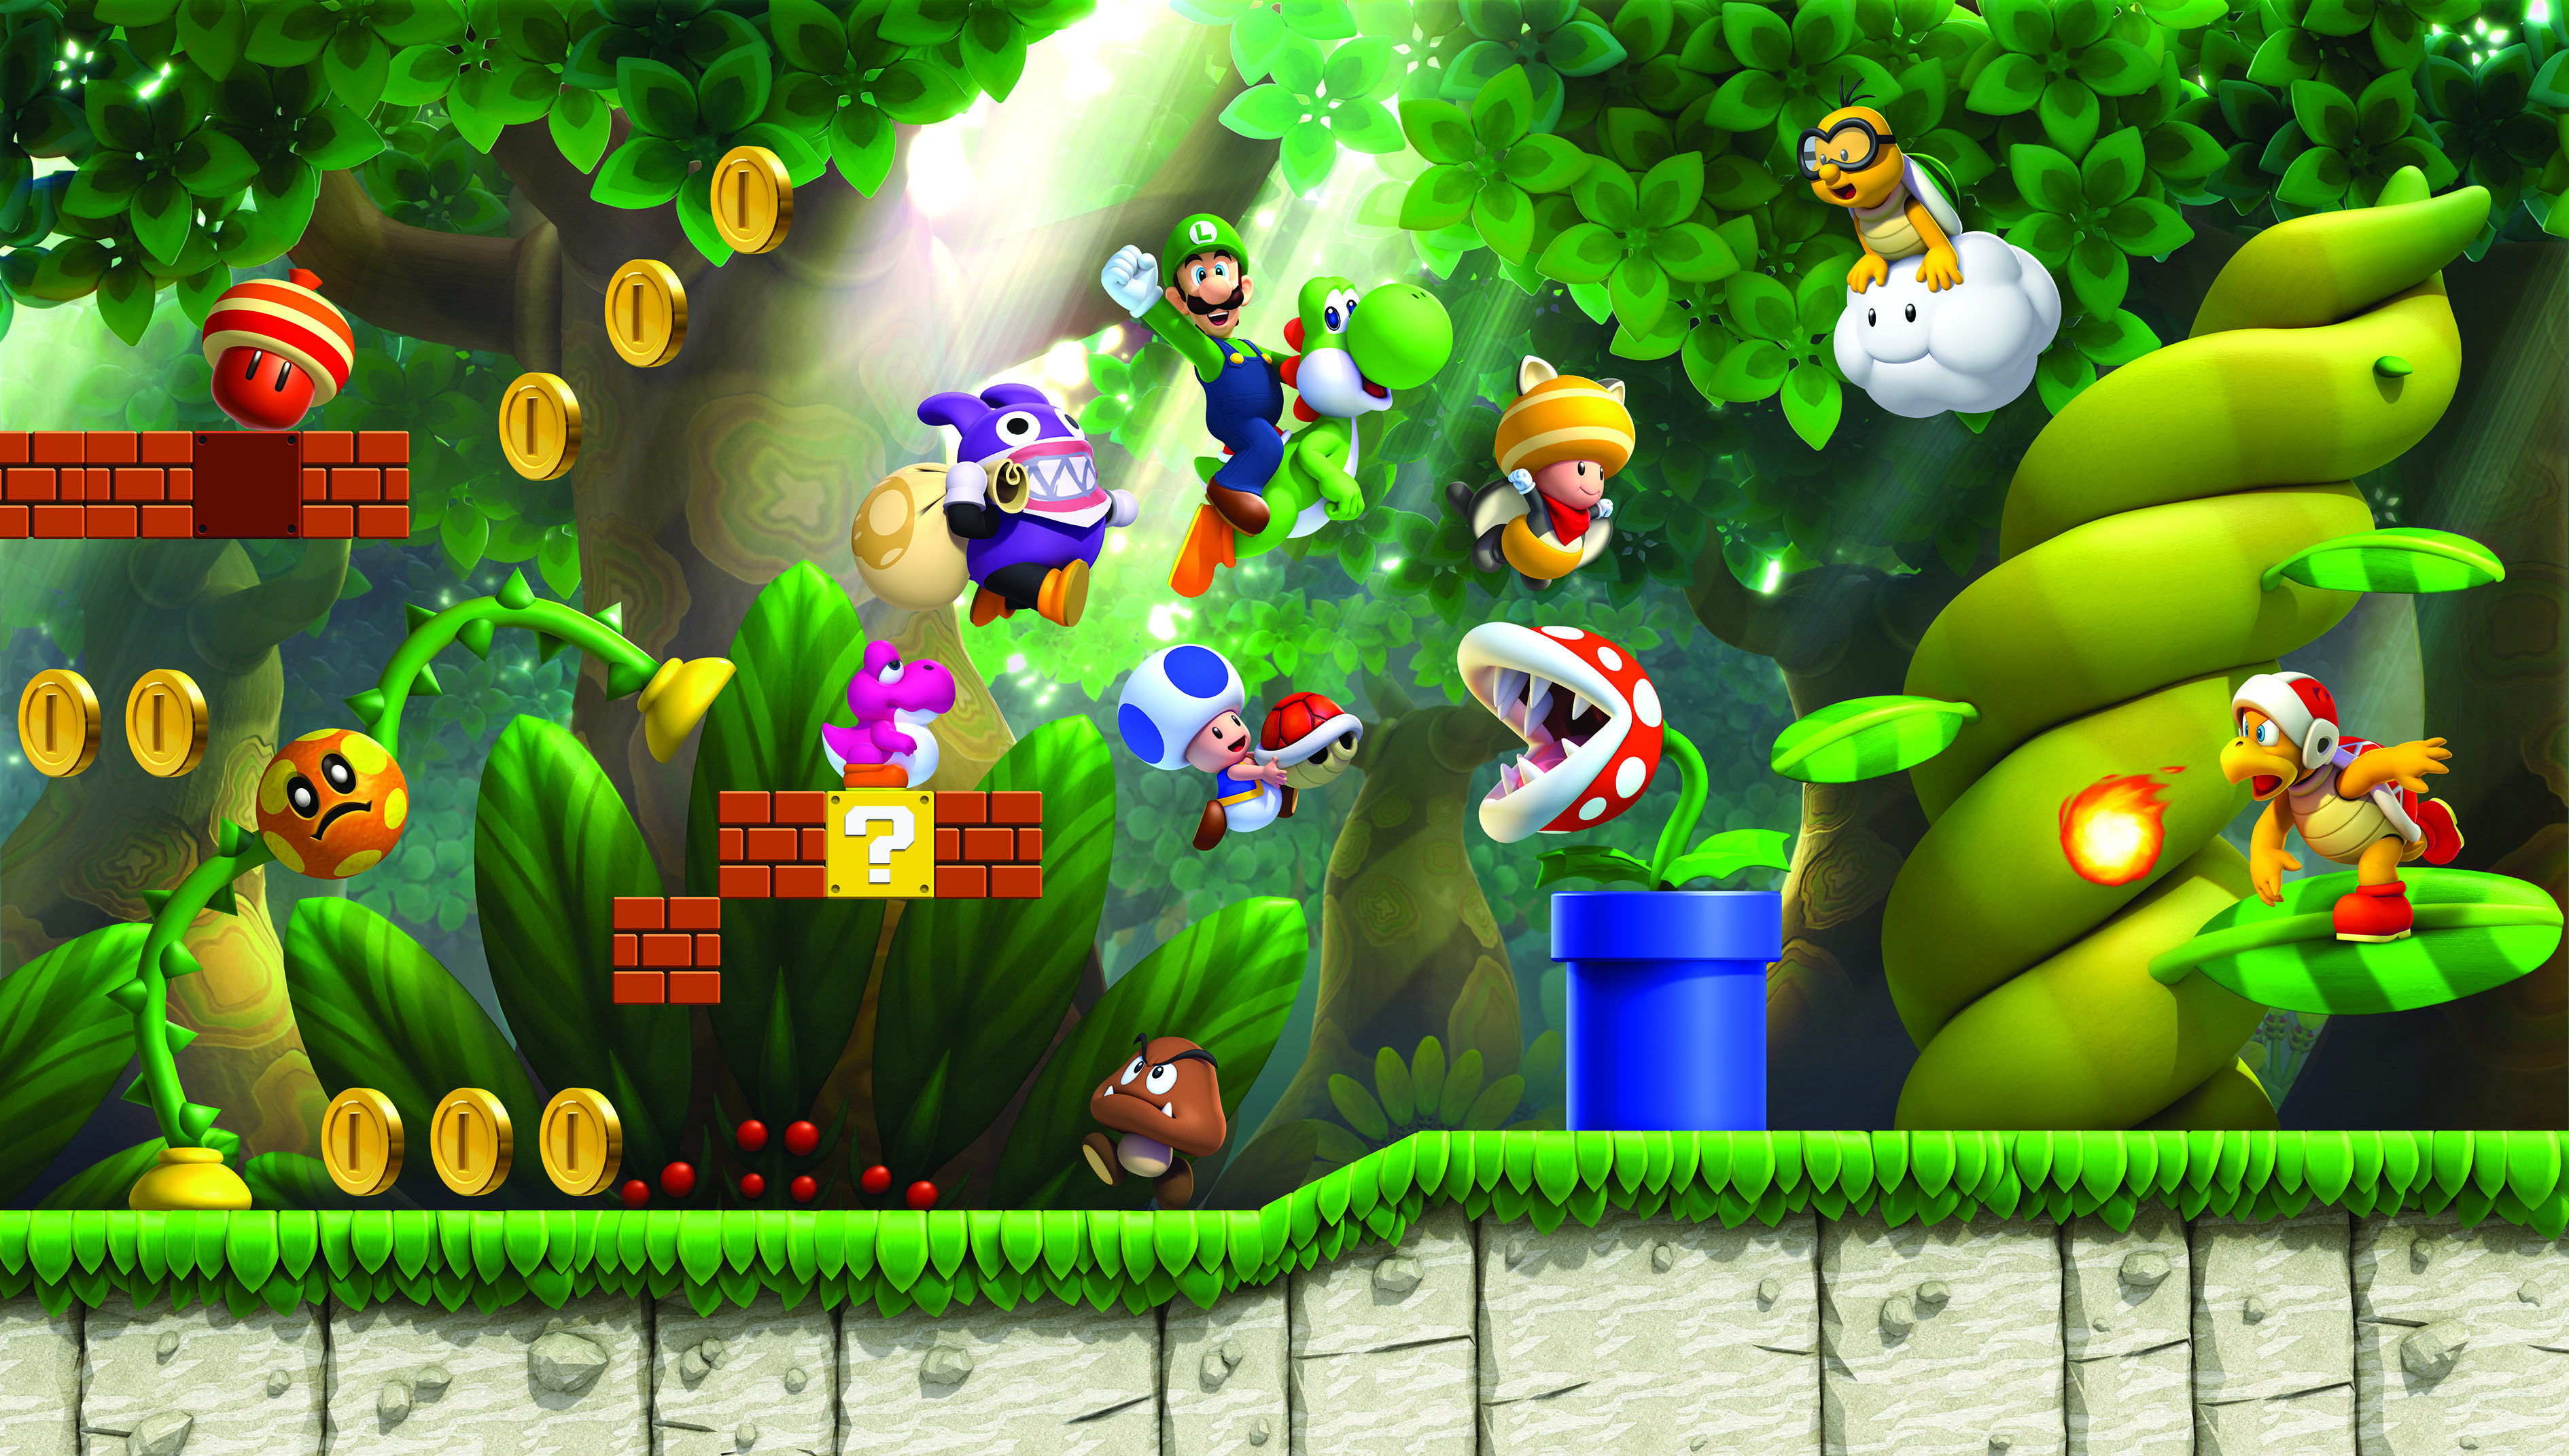 15 New Super Luigi U HD Wallpapers | Backgrounds - Wallpaper Abyss